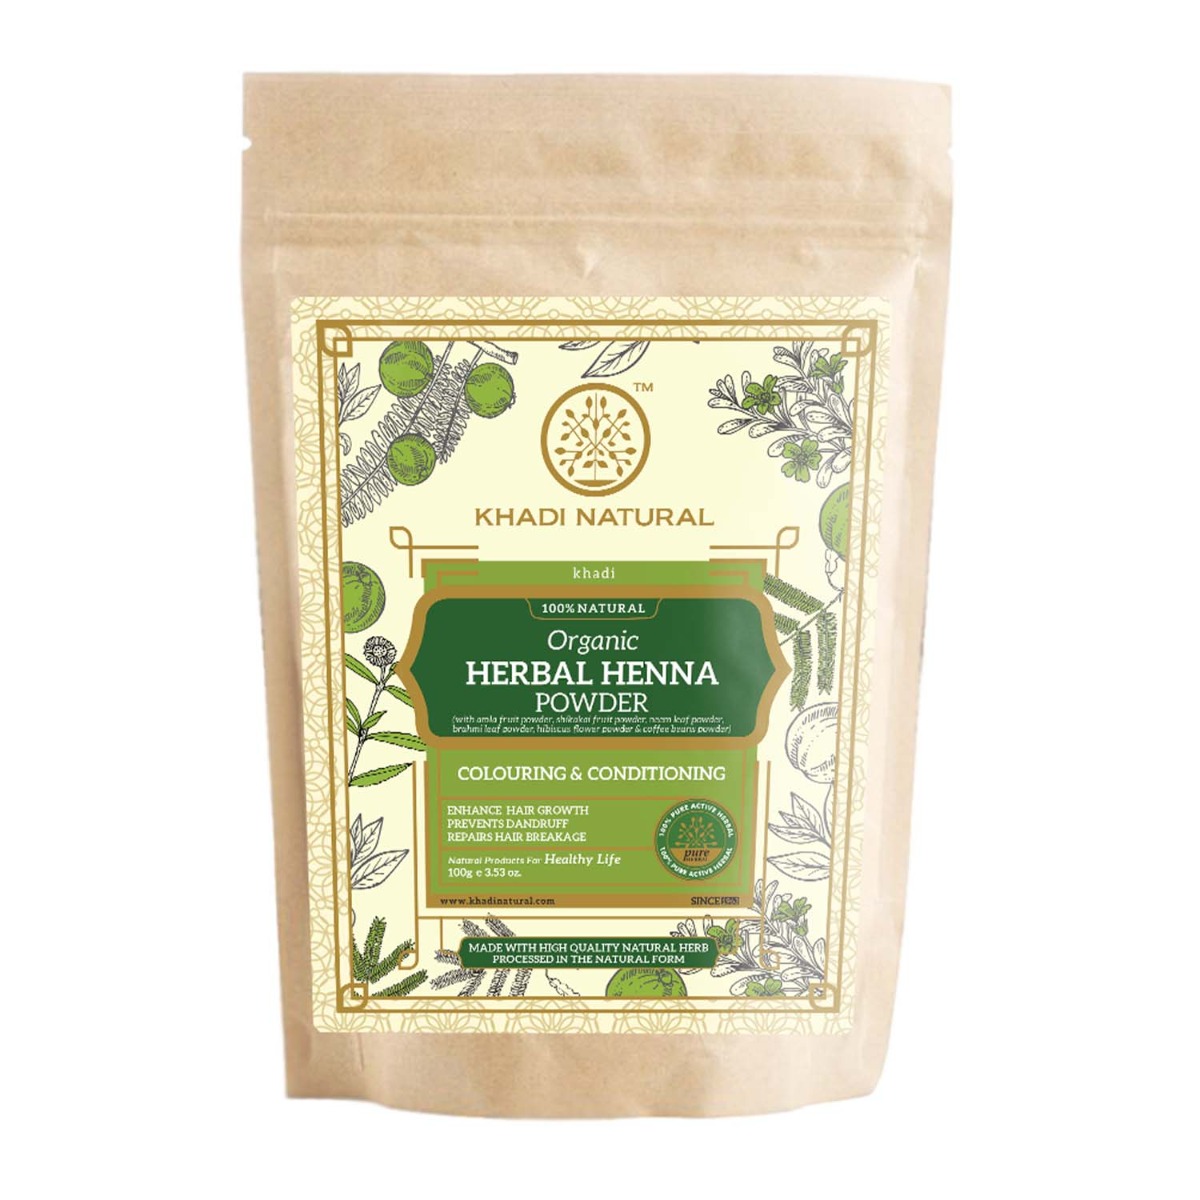 Khadi Natural Herbal Henna Organic Powder, 100gm